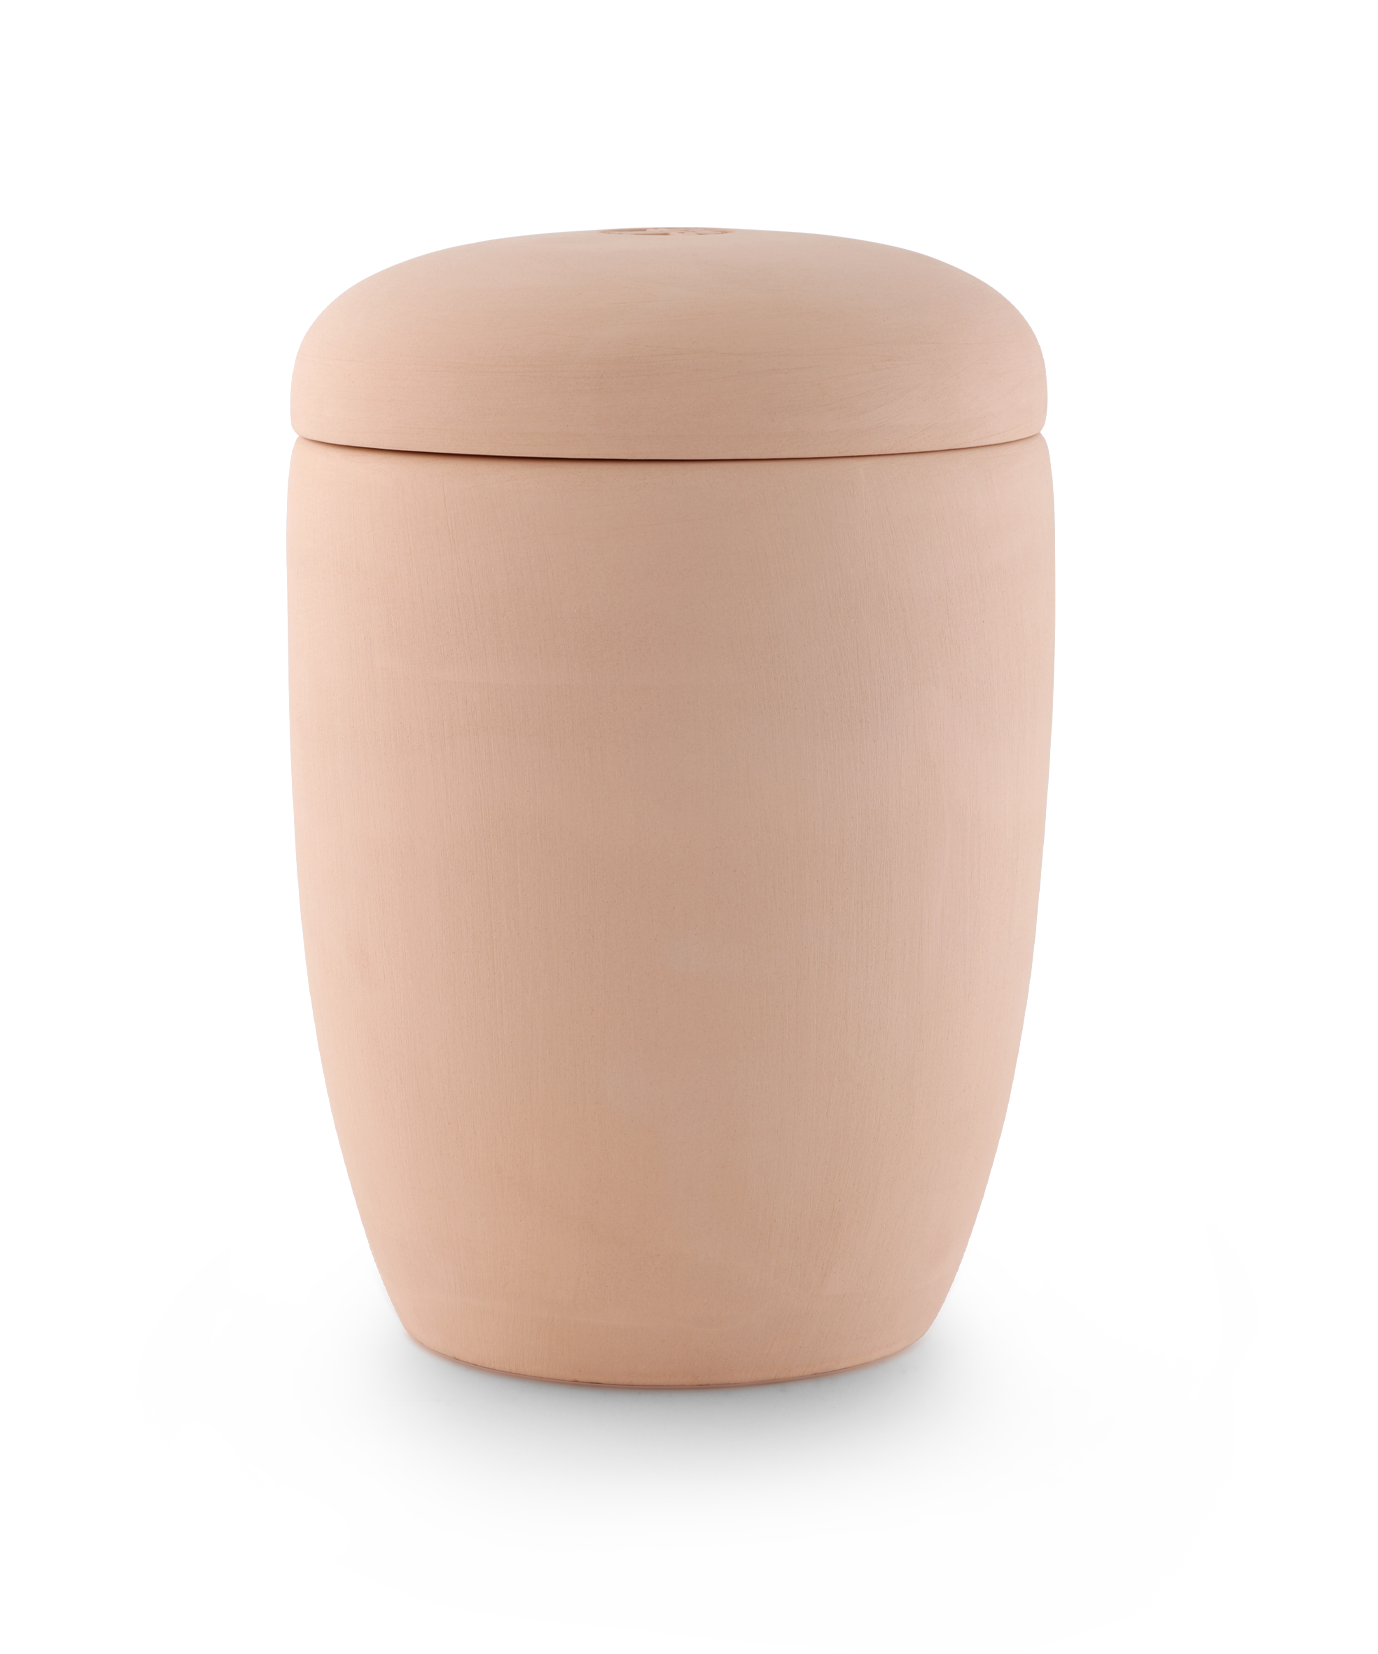 Völsing natural urn made of raw clay ceramic